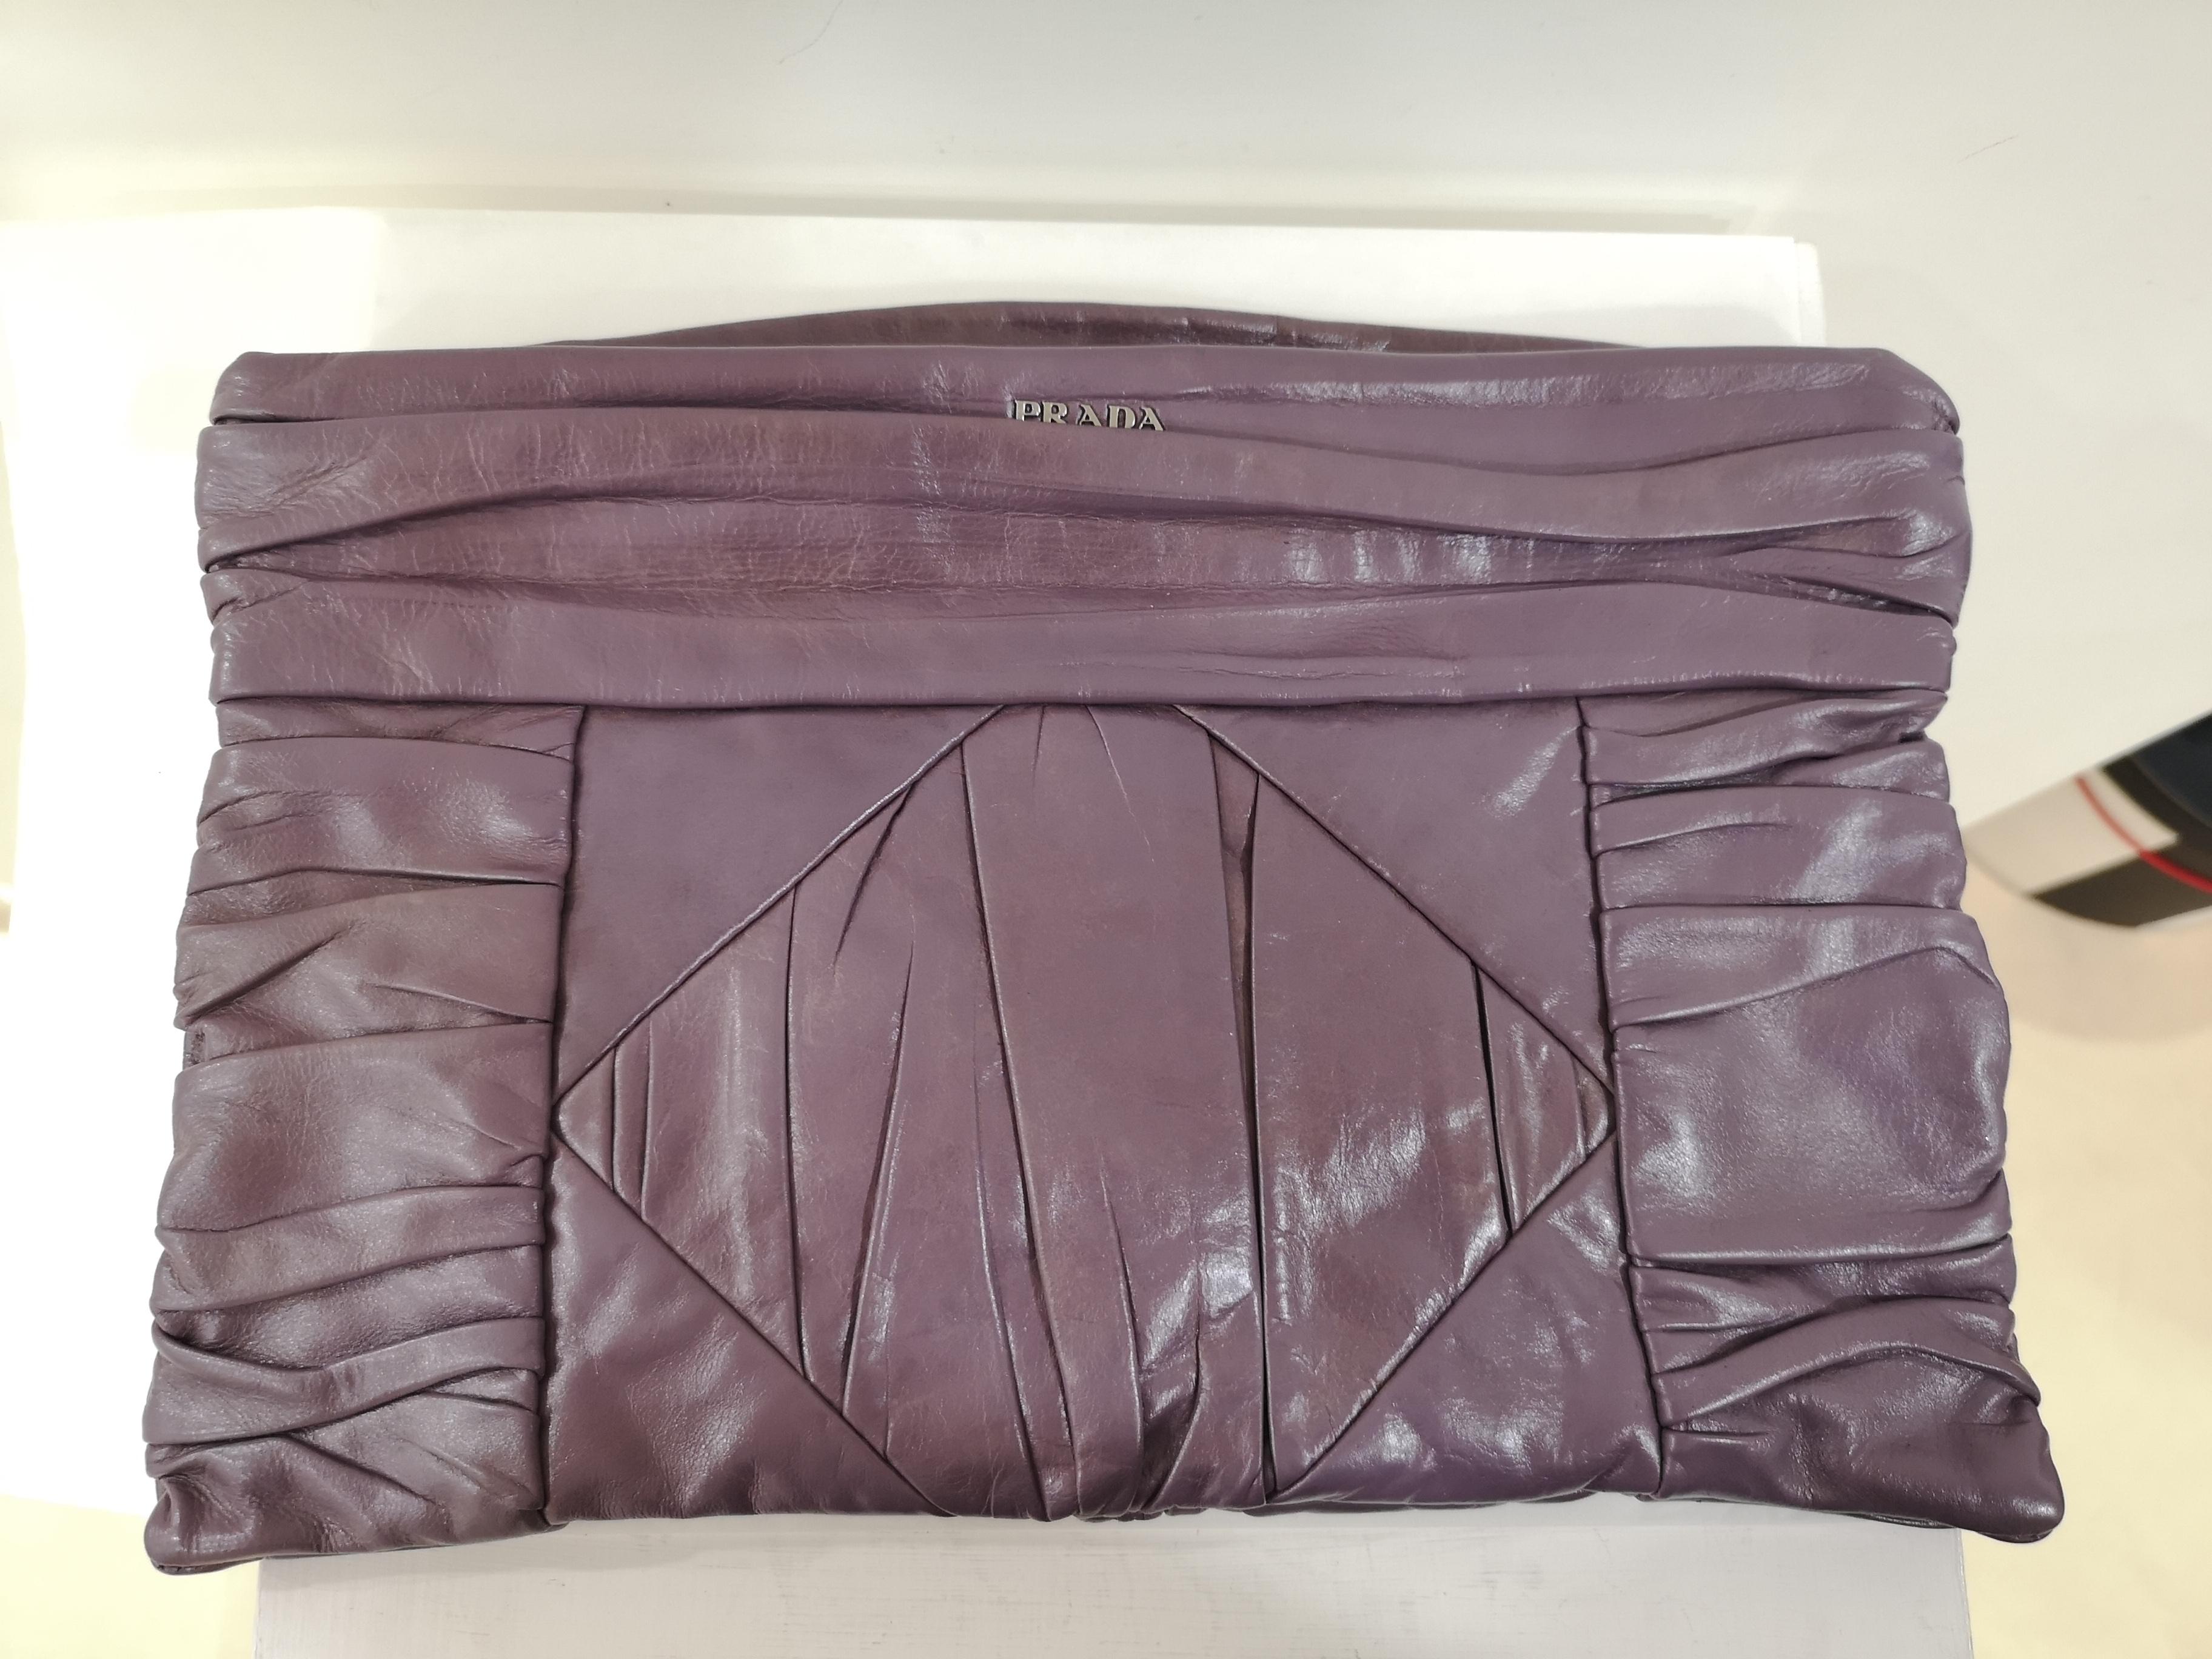 Prada purple leather handbag
totally made in italy
measurements: 22 * 33 cm